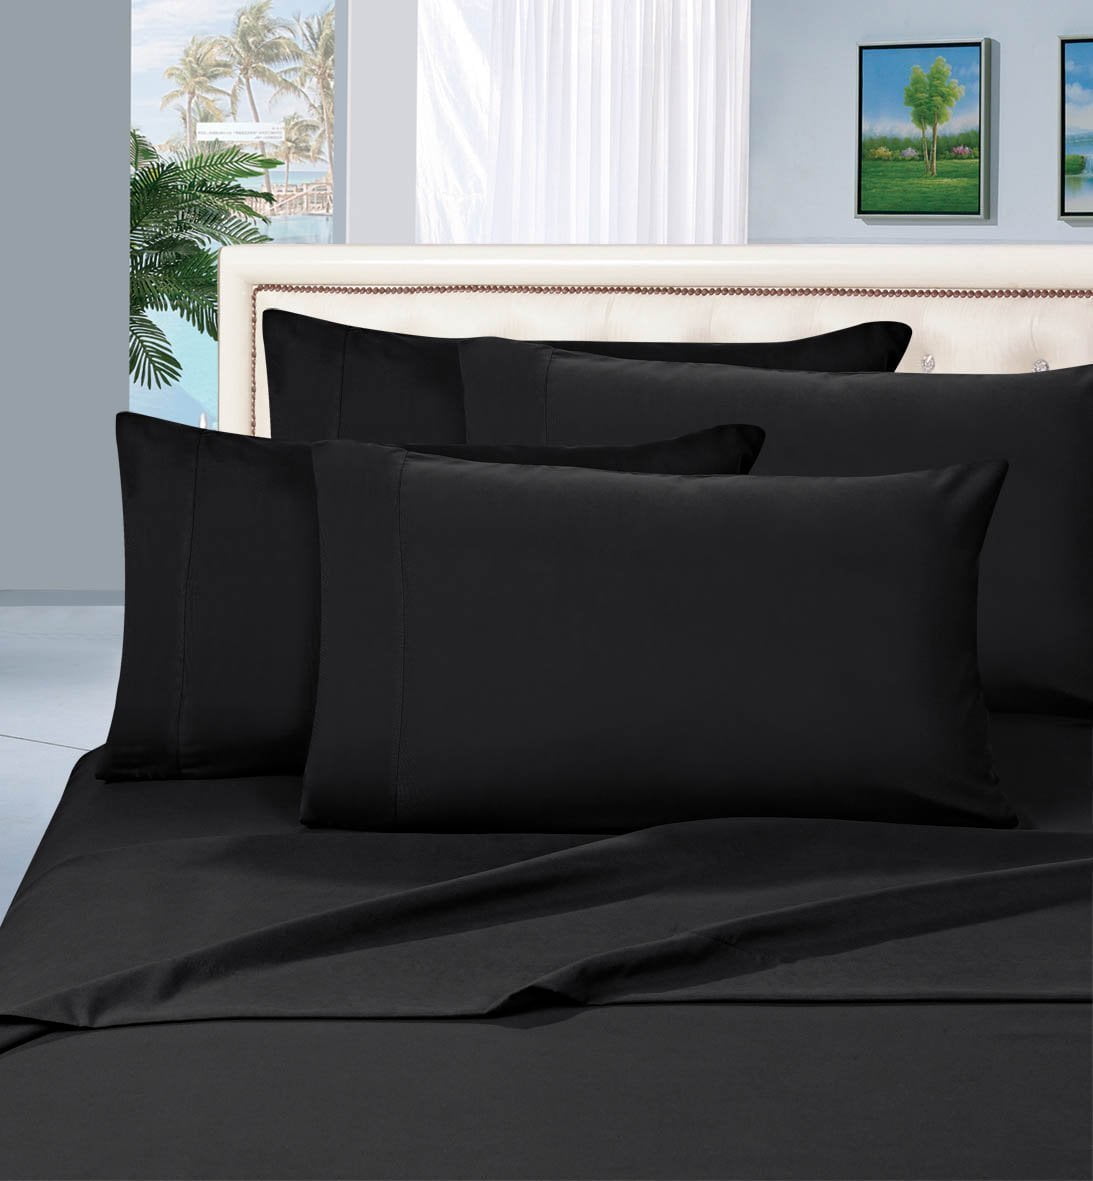 DreamLinen Pillowcases Super Soft 100% Egyptian Cotton Pillow Cases Silky Soft & Wrinkle Free 2pc Pillowcase Set King Size Darkgrey Solid